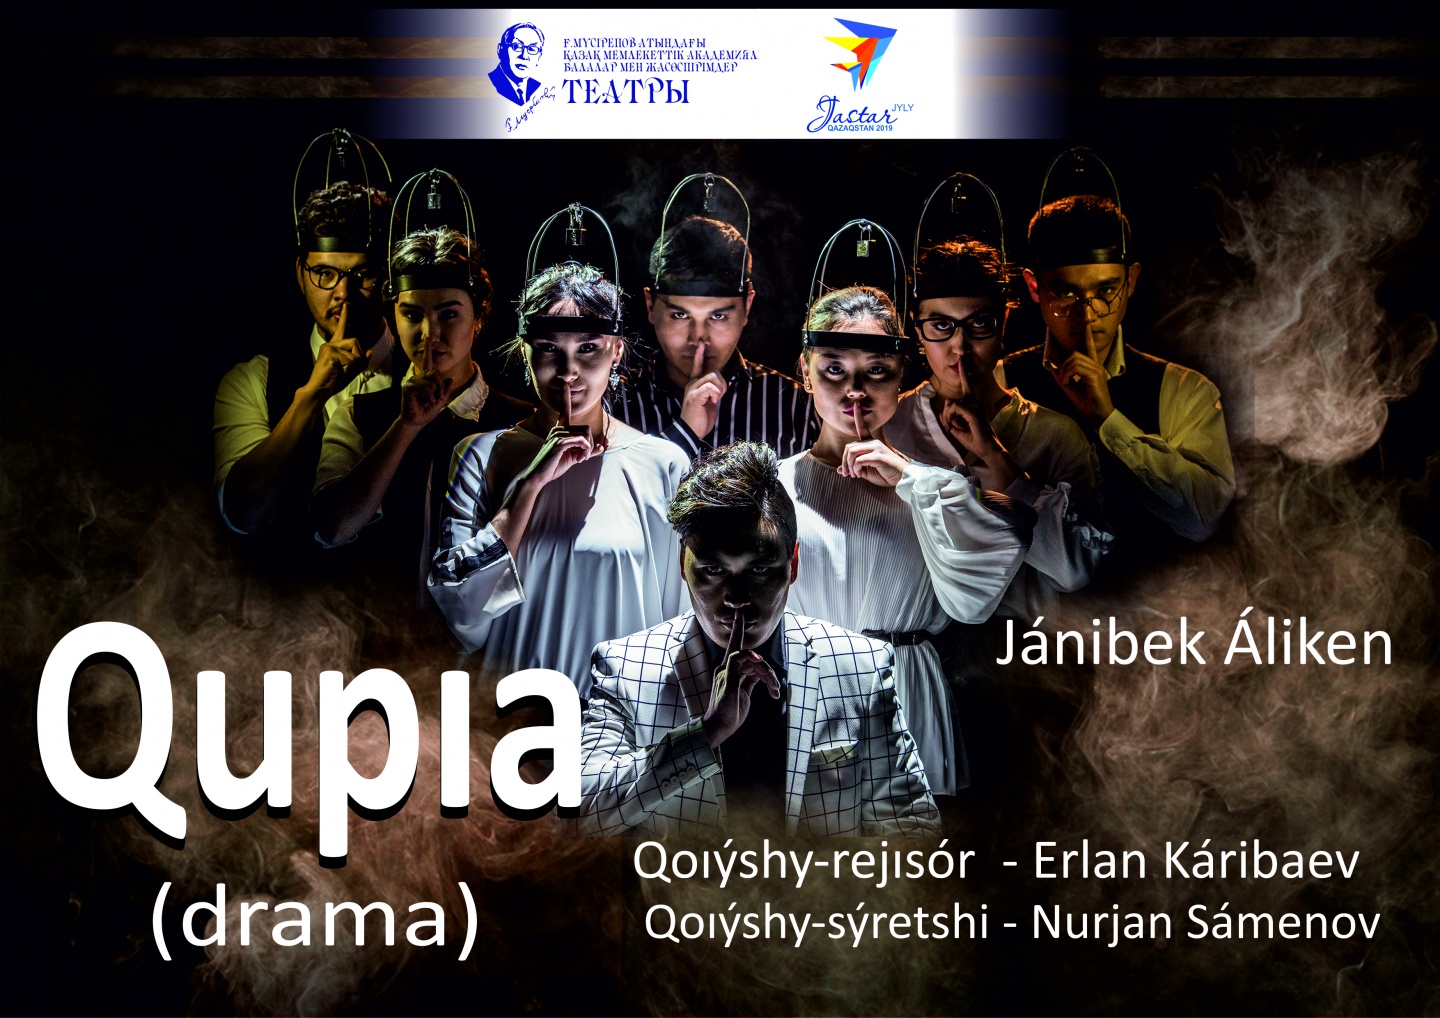 Músirepov atyndaǵy teatrda "Qupııa" qoıylymynyń premerasy ótedi